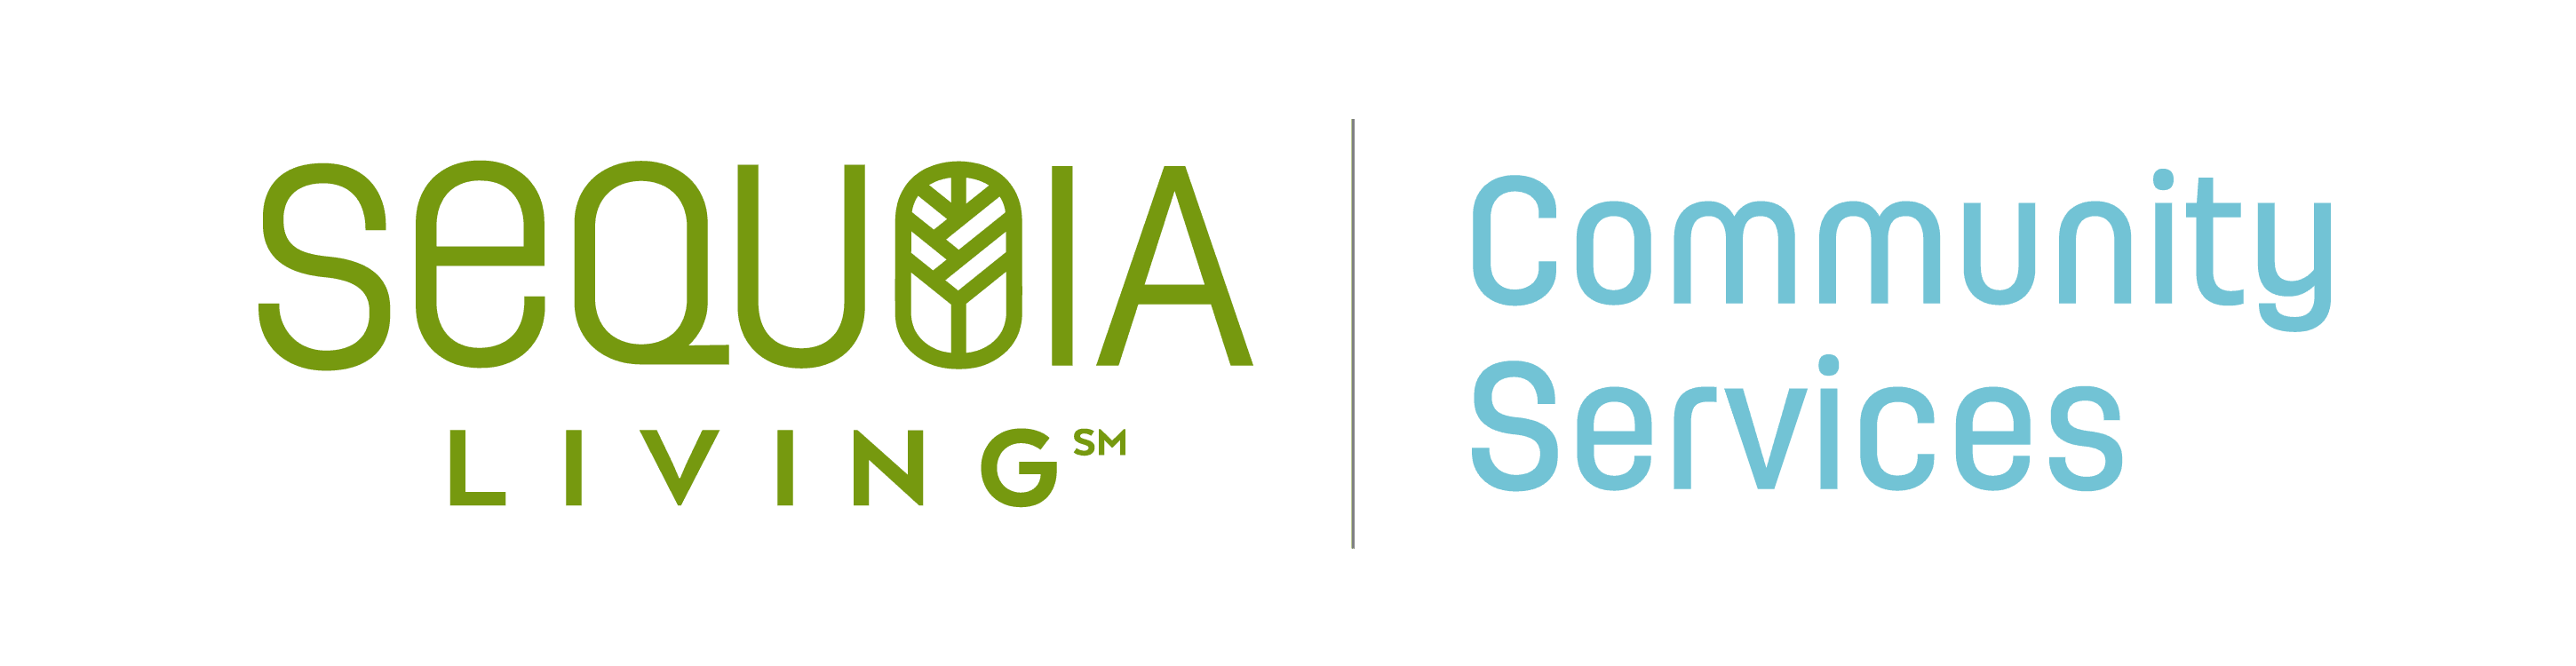 Sequoia Living - Community Services logo